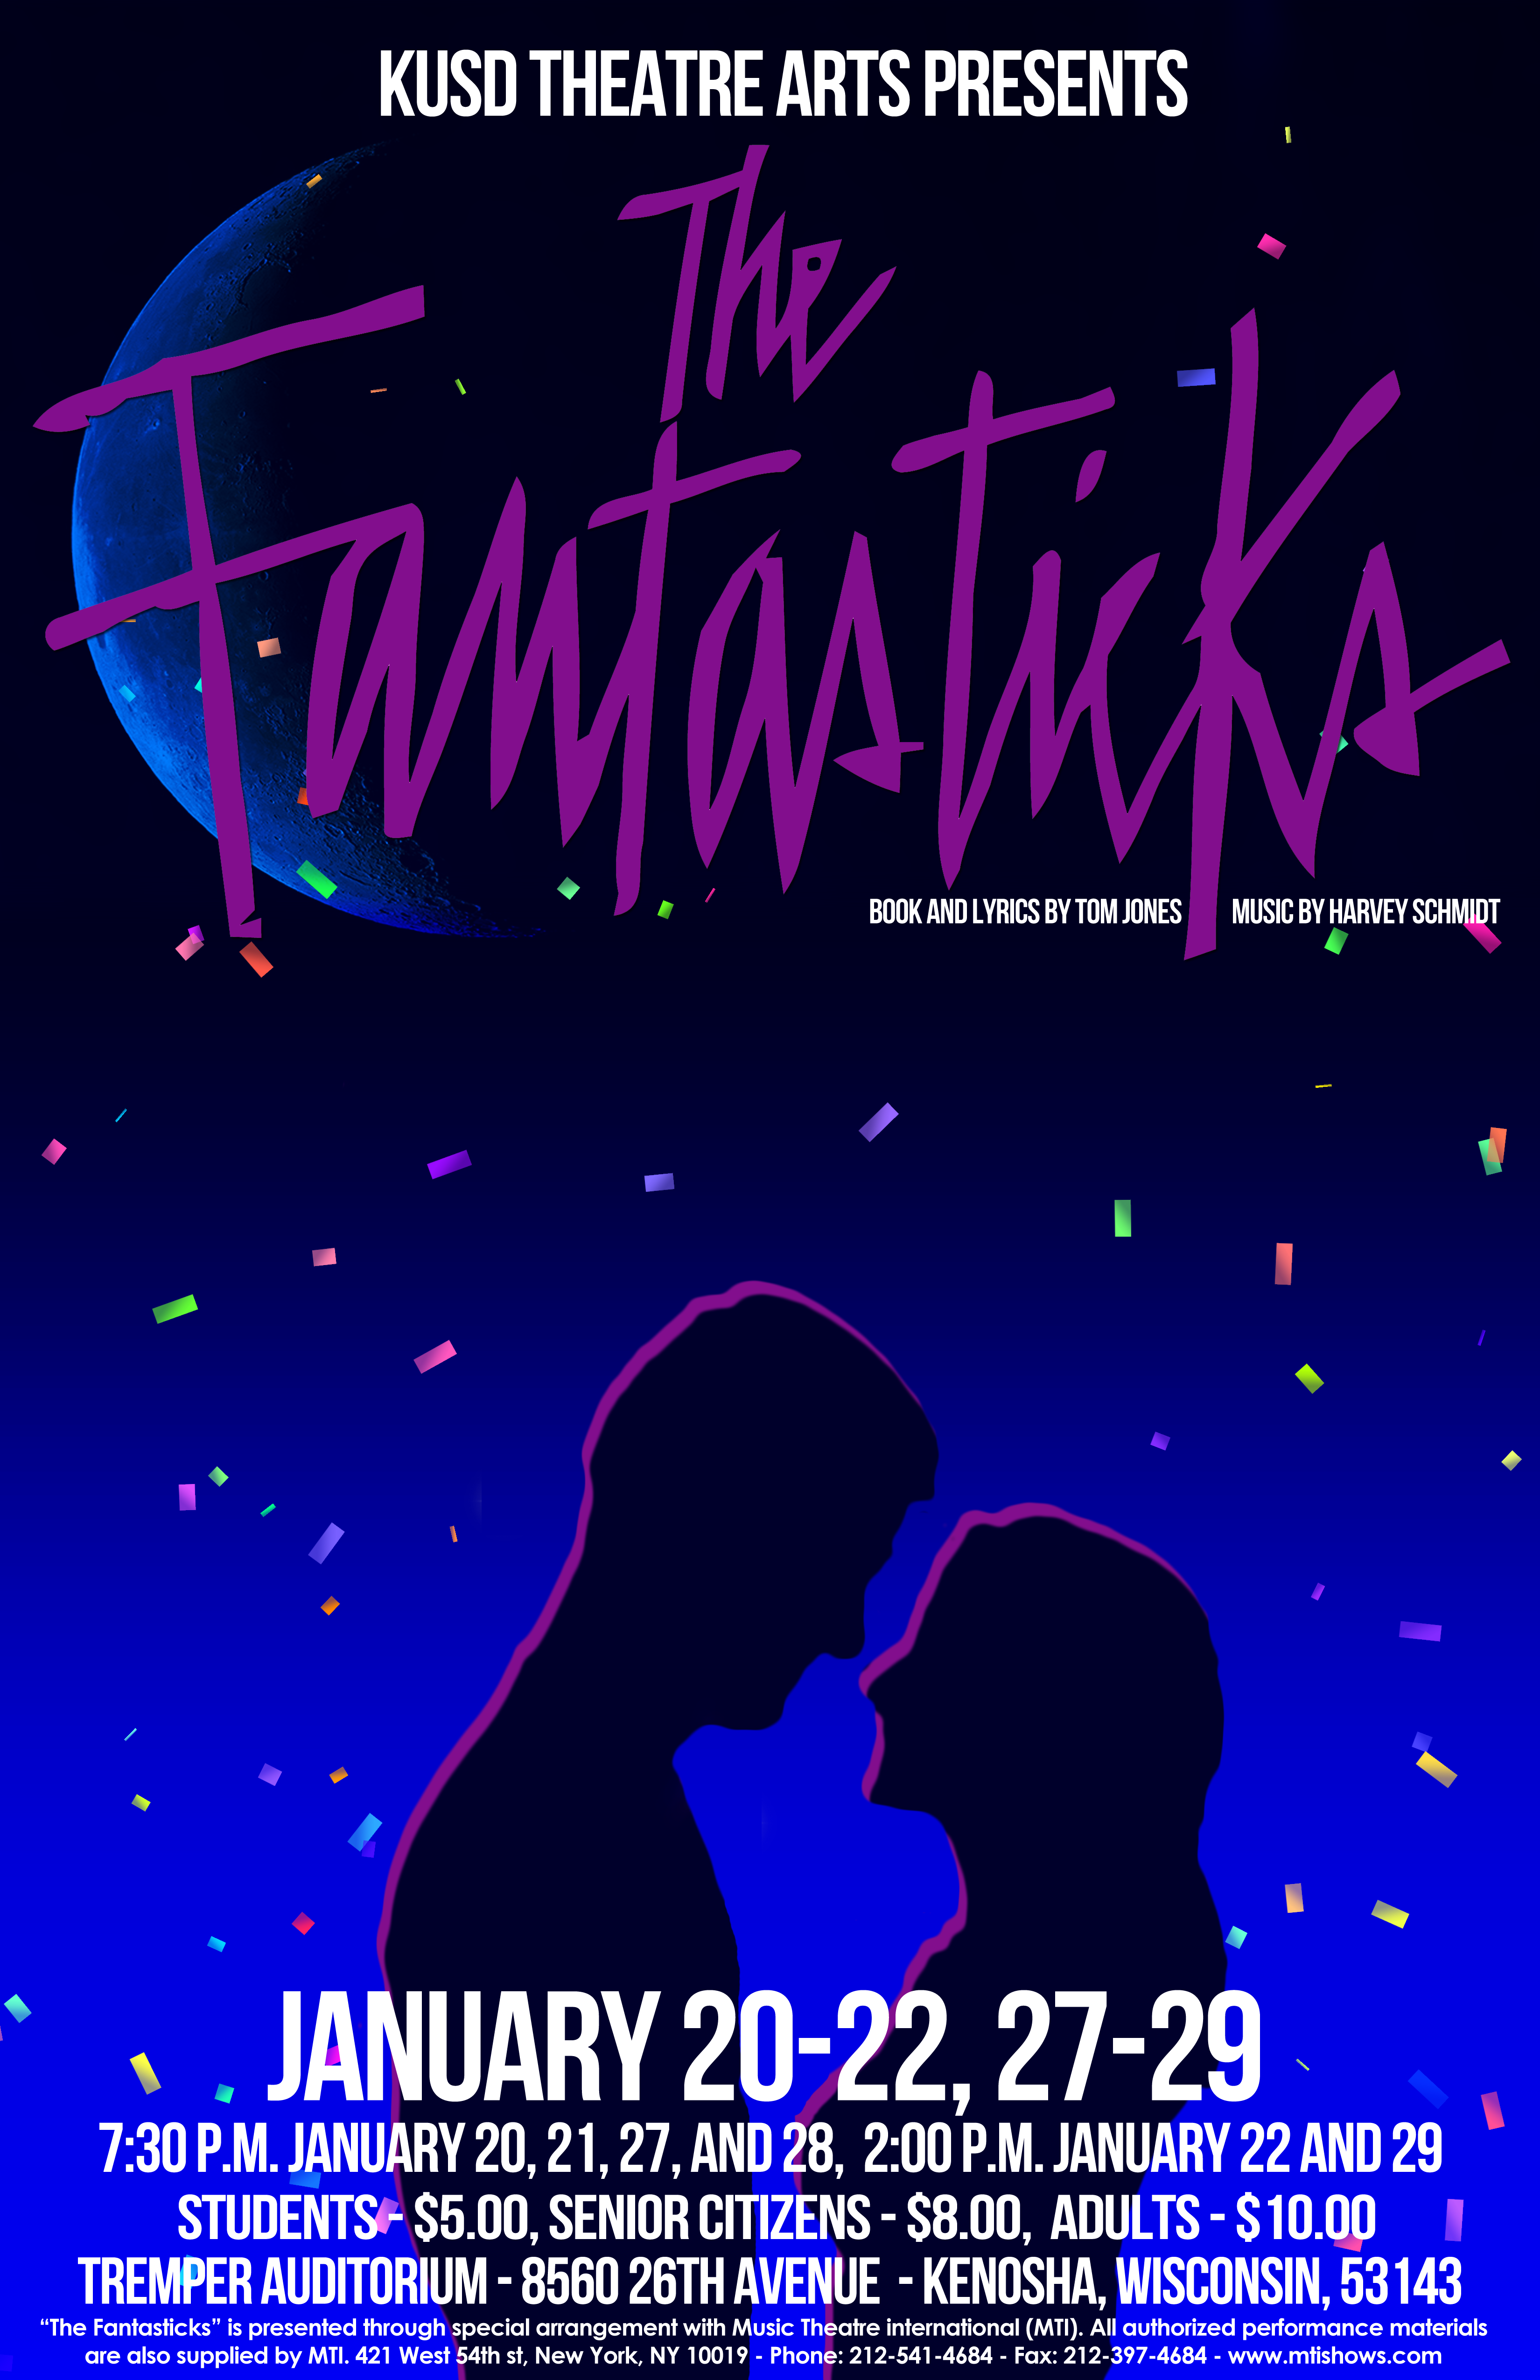 The poster for The Fantasticks